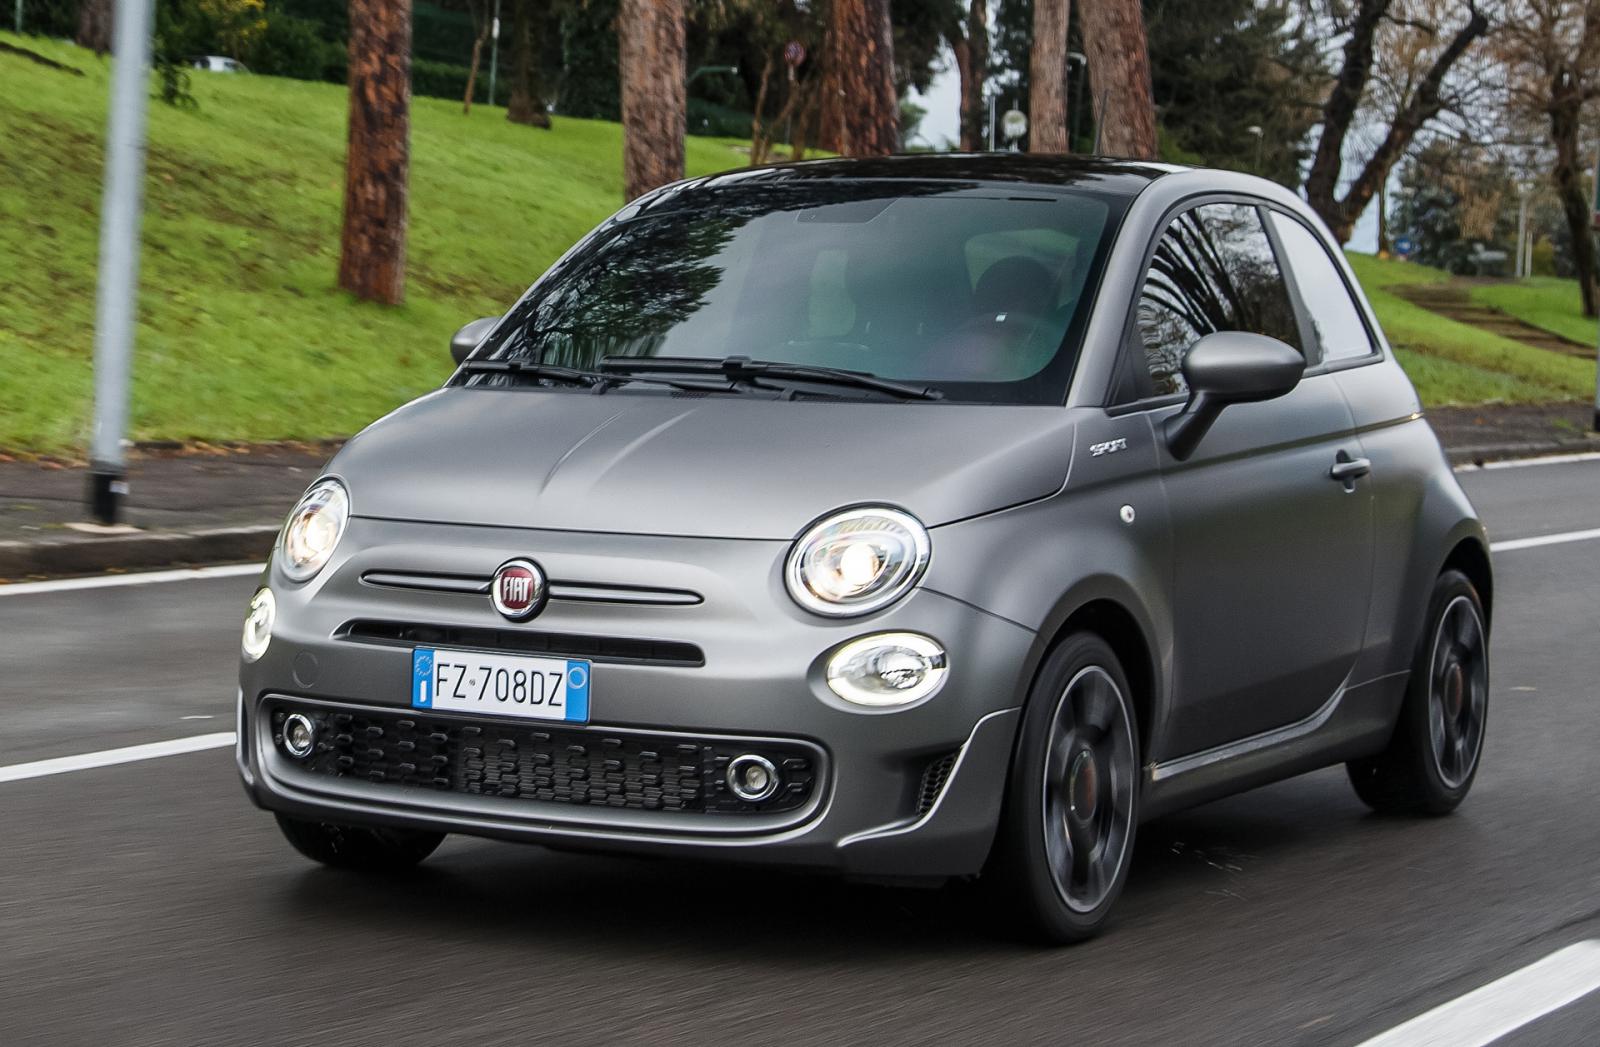 Fiat: Όφελος έως 3.200 ευρώ, 0% προκαταβολή & 5ετη εγγύηση